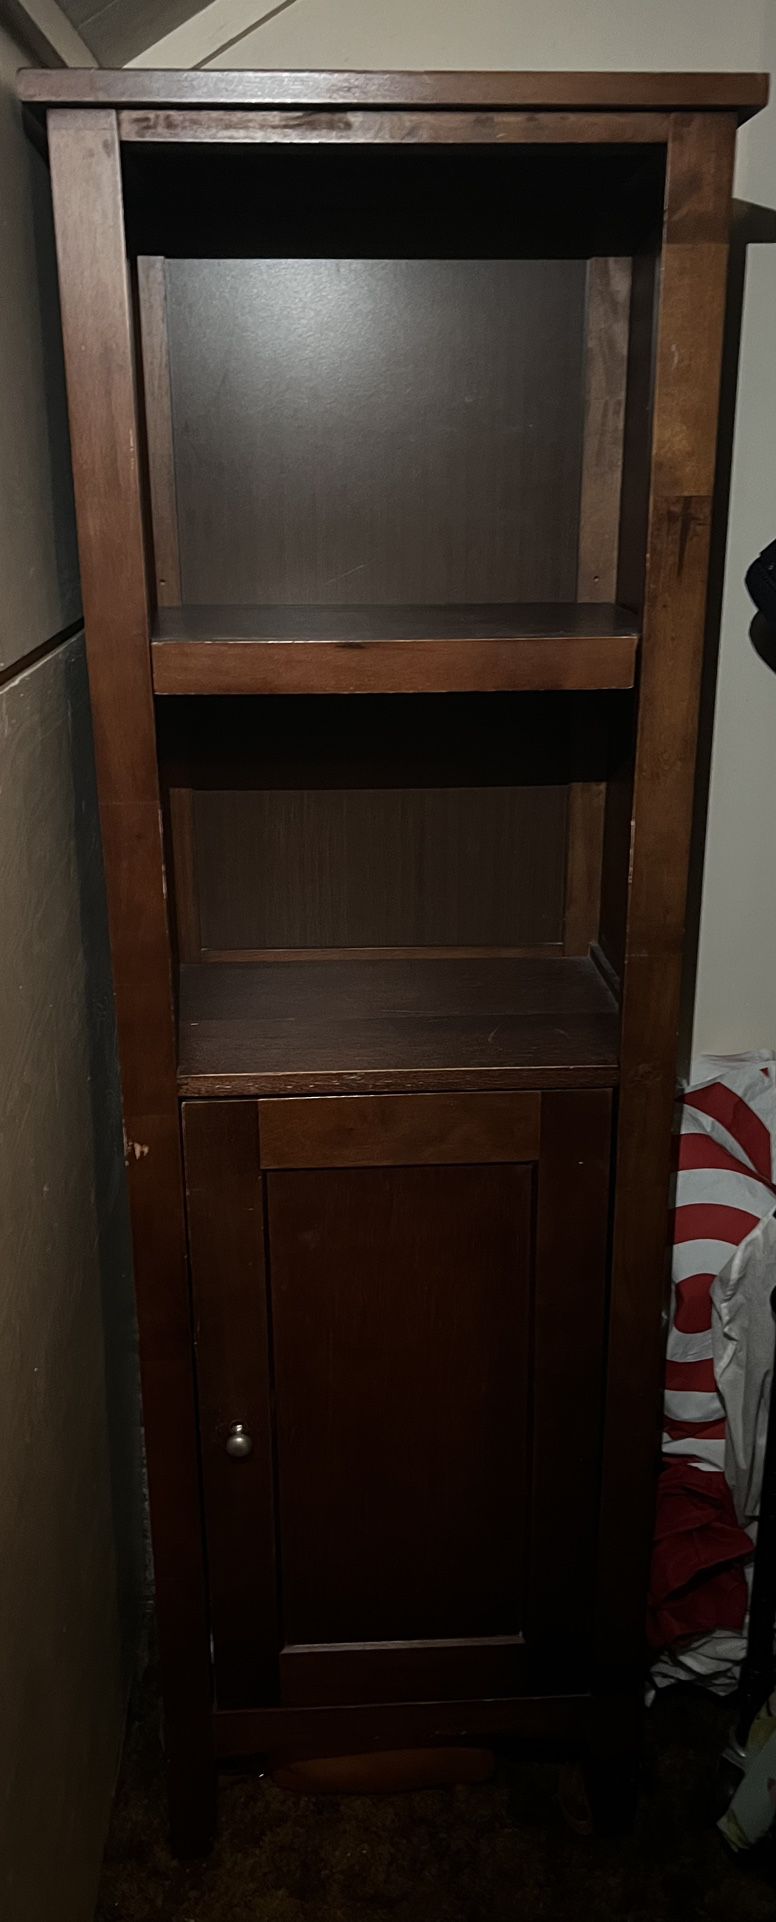 Cabinet Shelf 